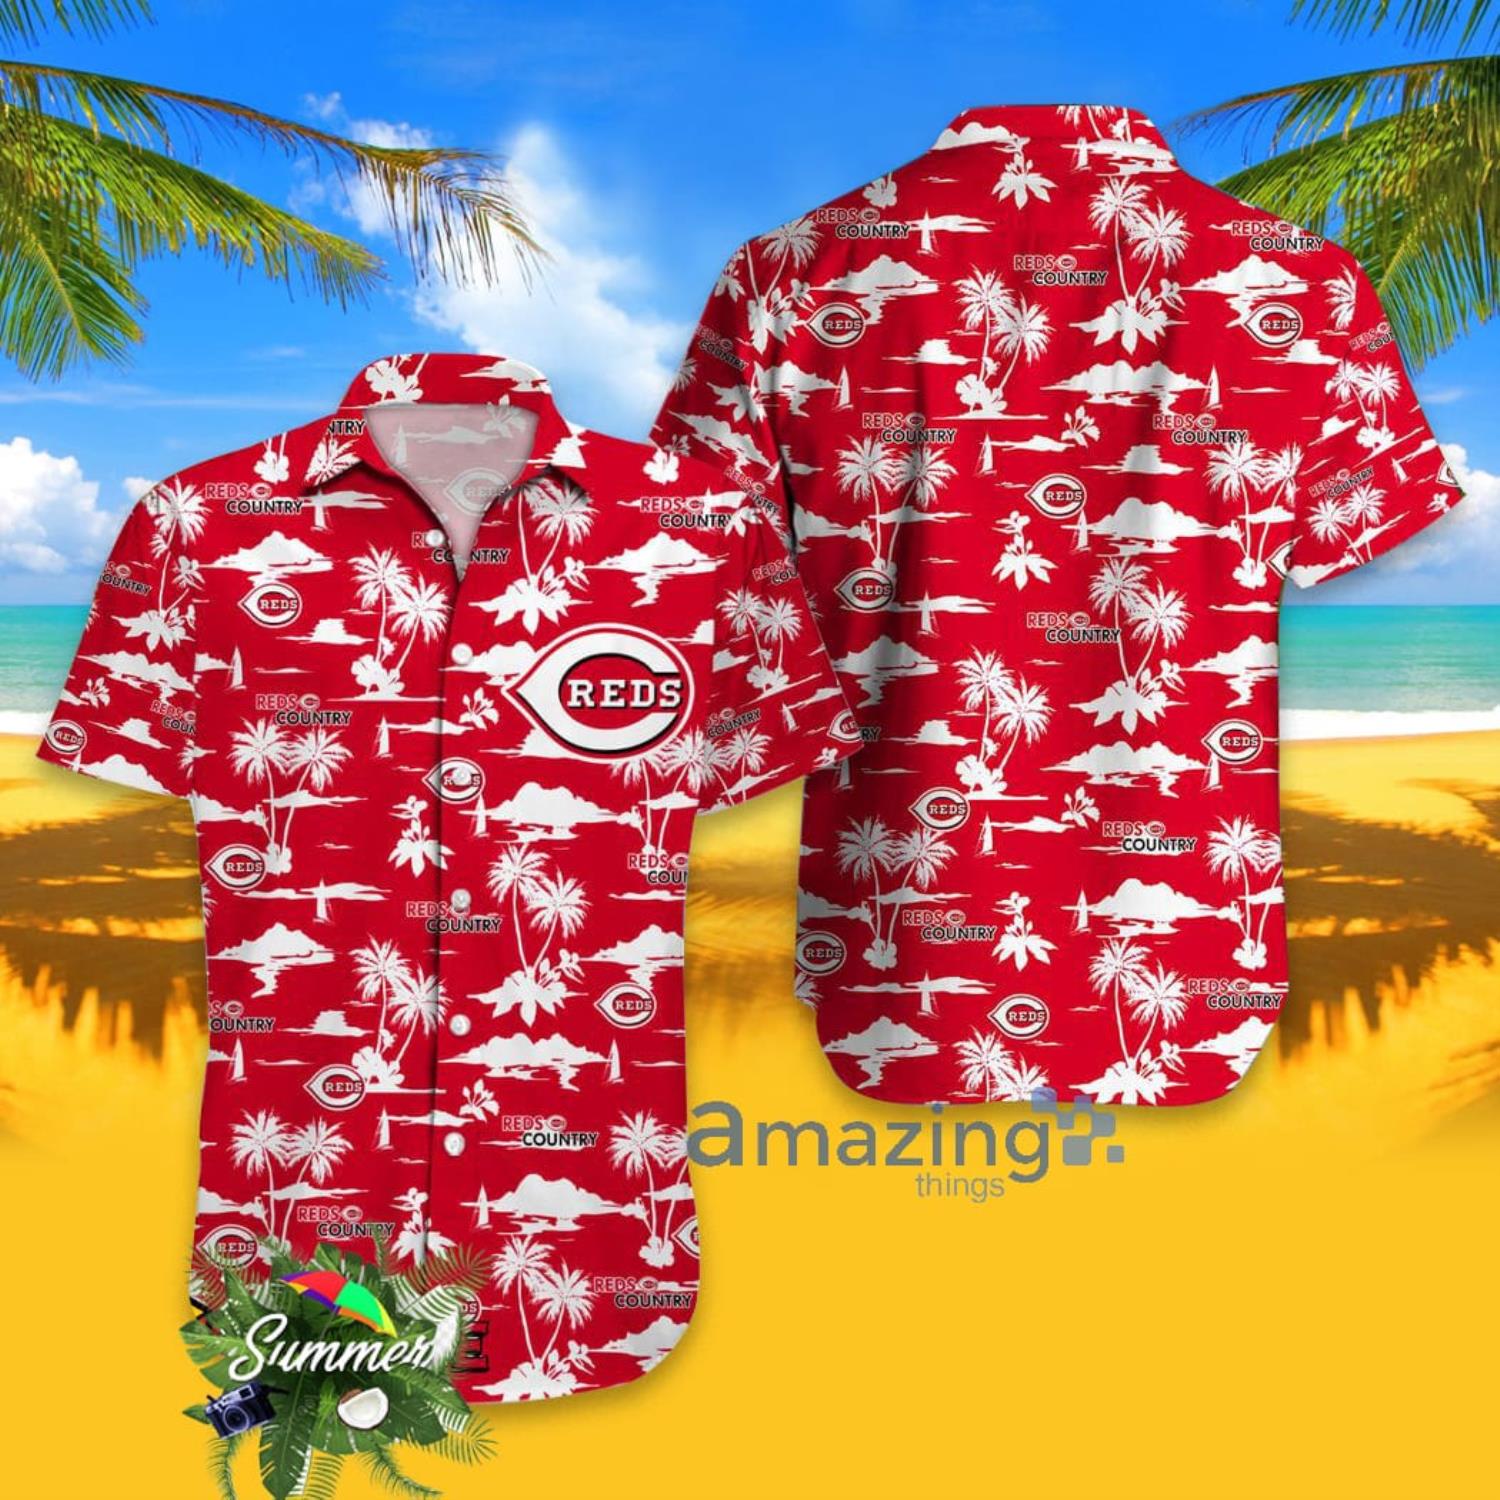 Cincinnati Reds Major League Baseball 2023 Hawaiian Shirt For Men